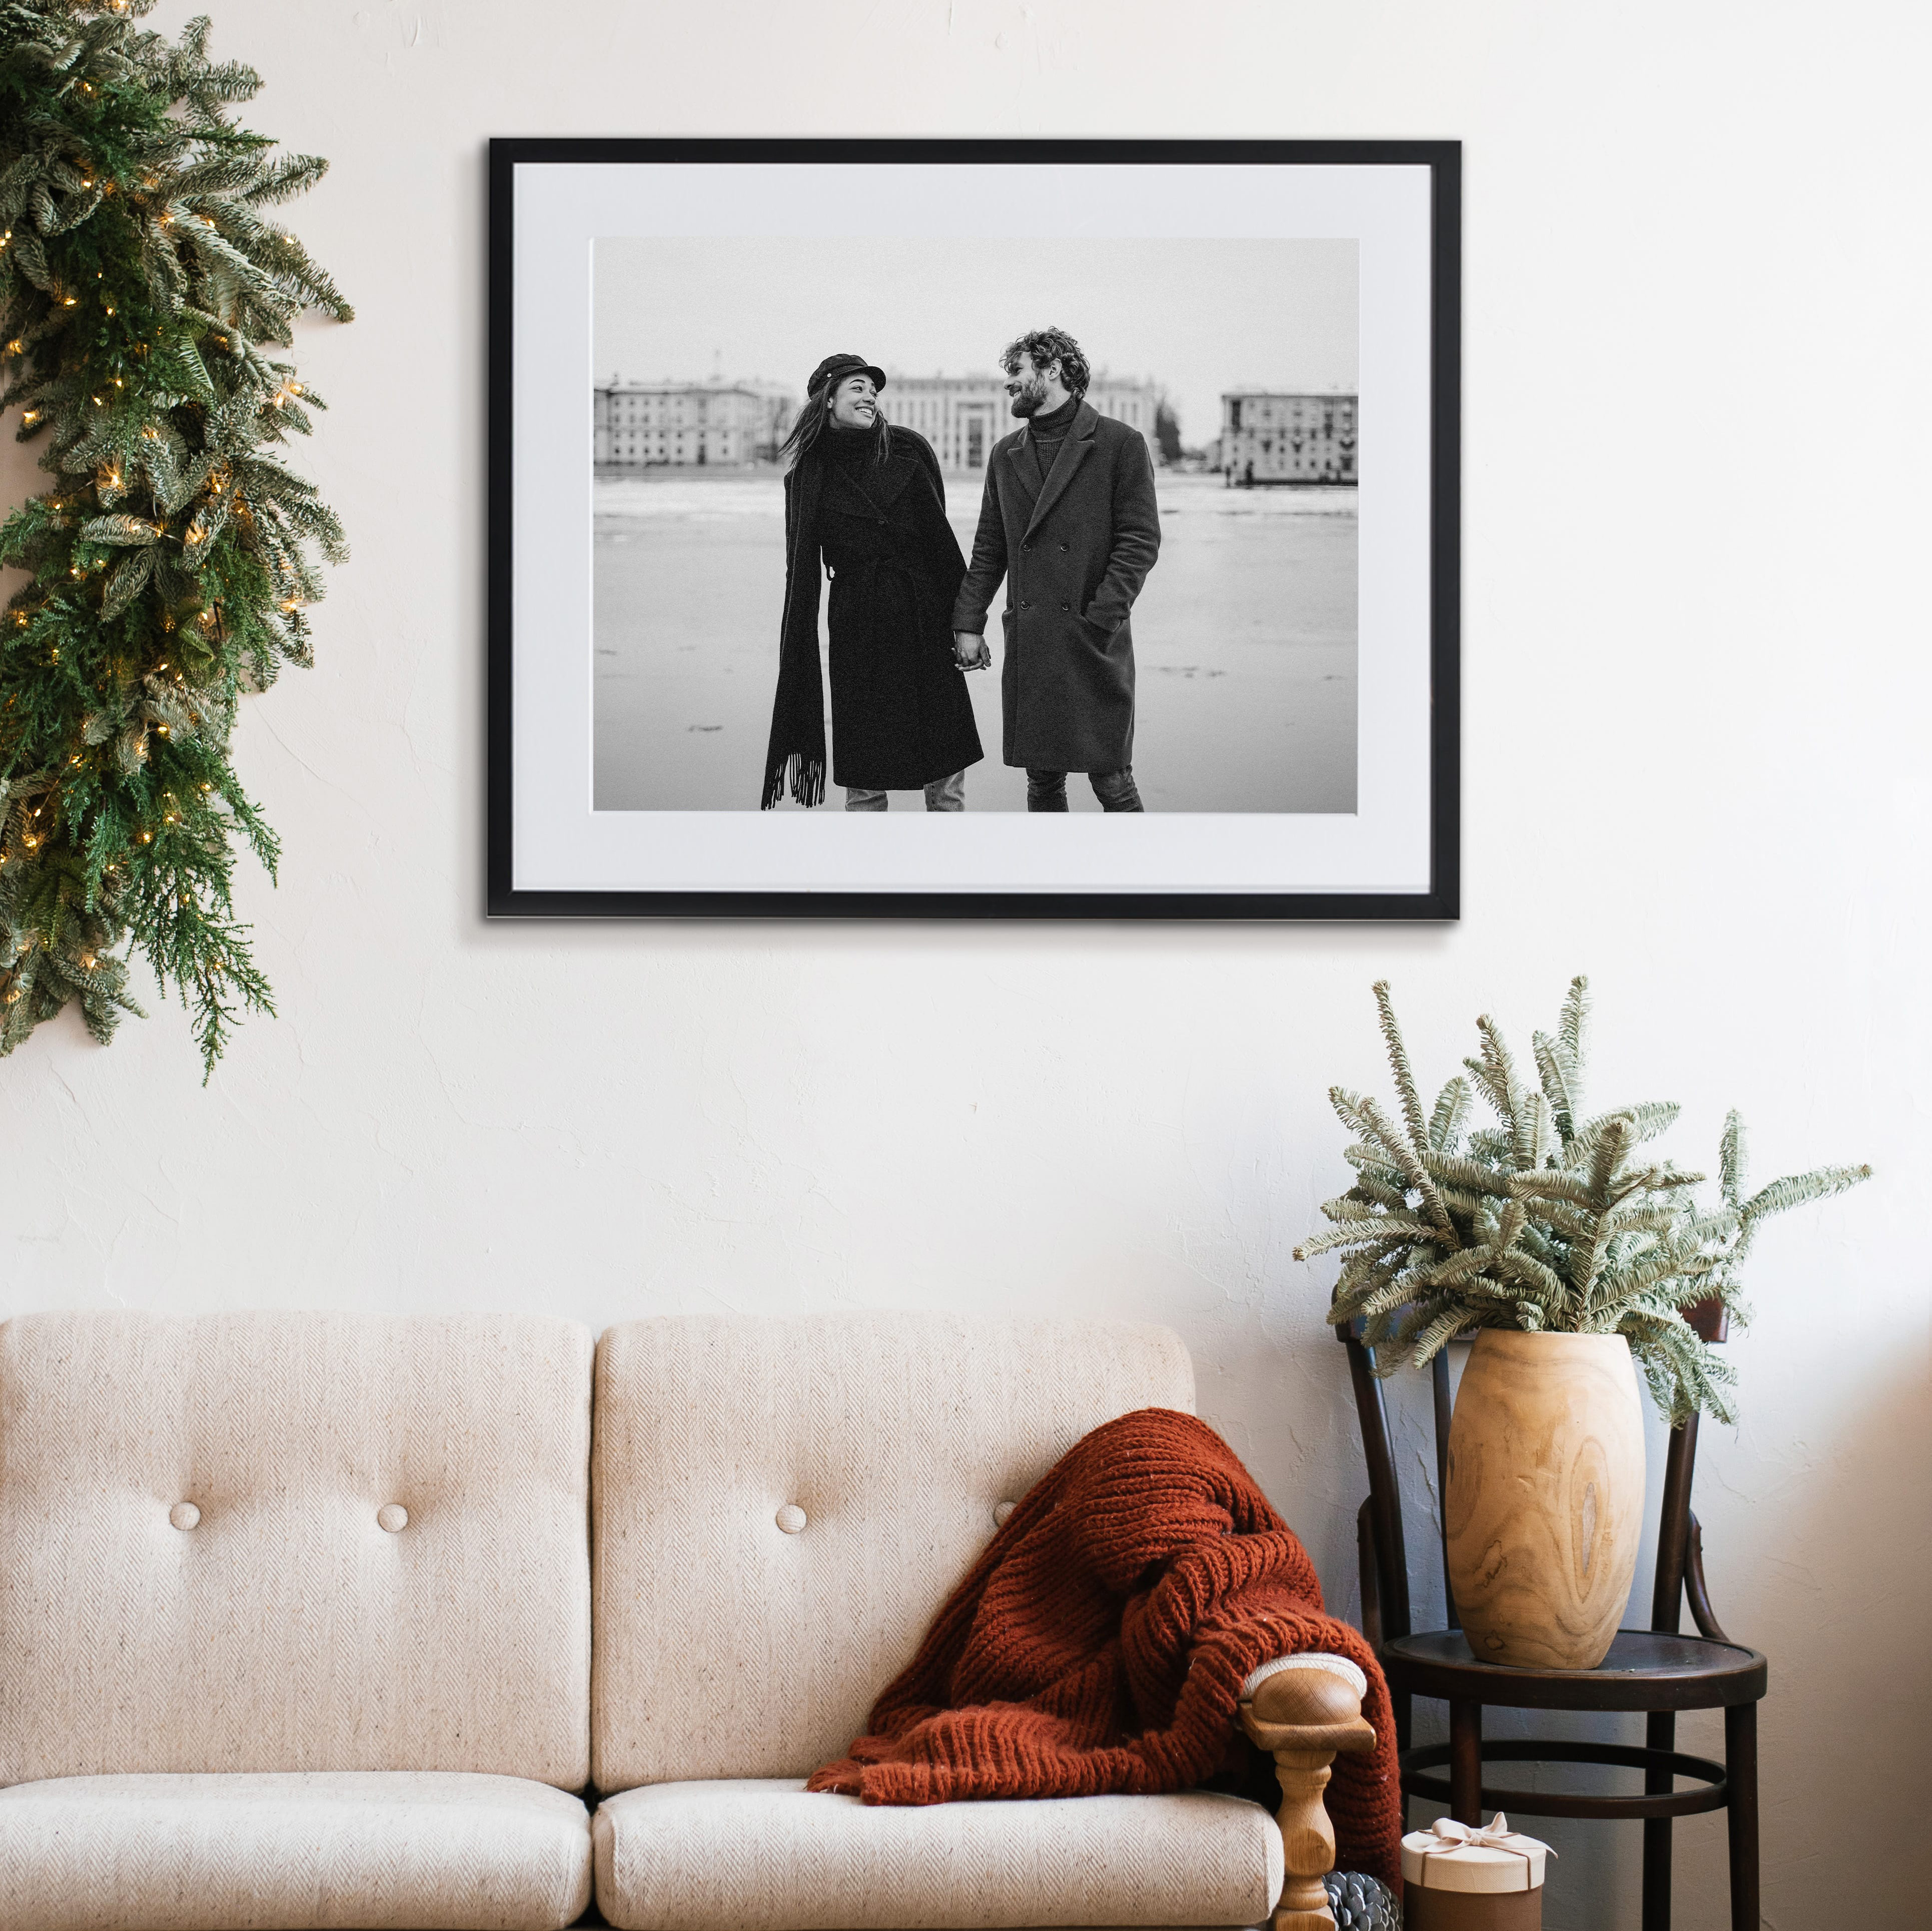 Framed print in living room of couple.